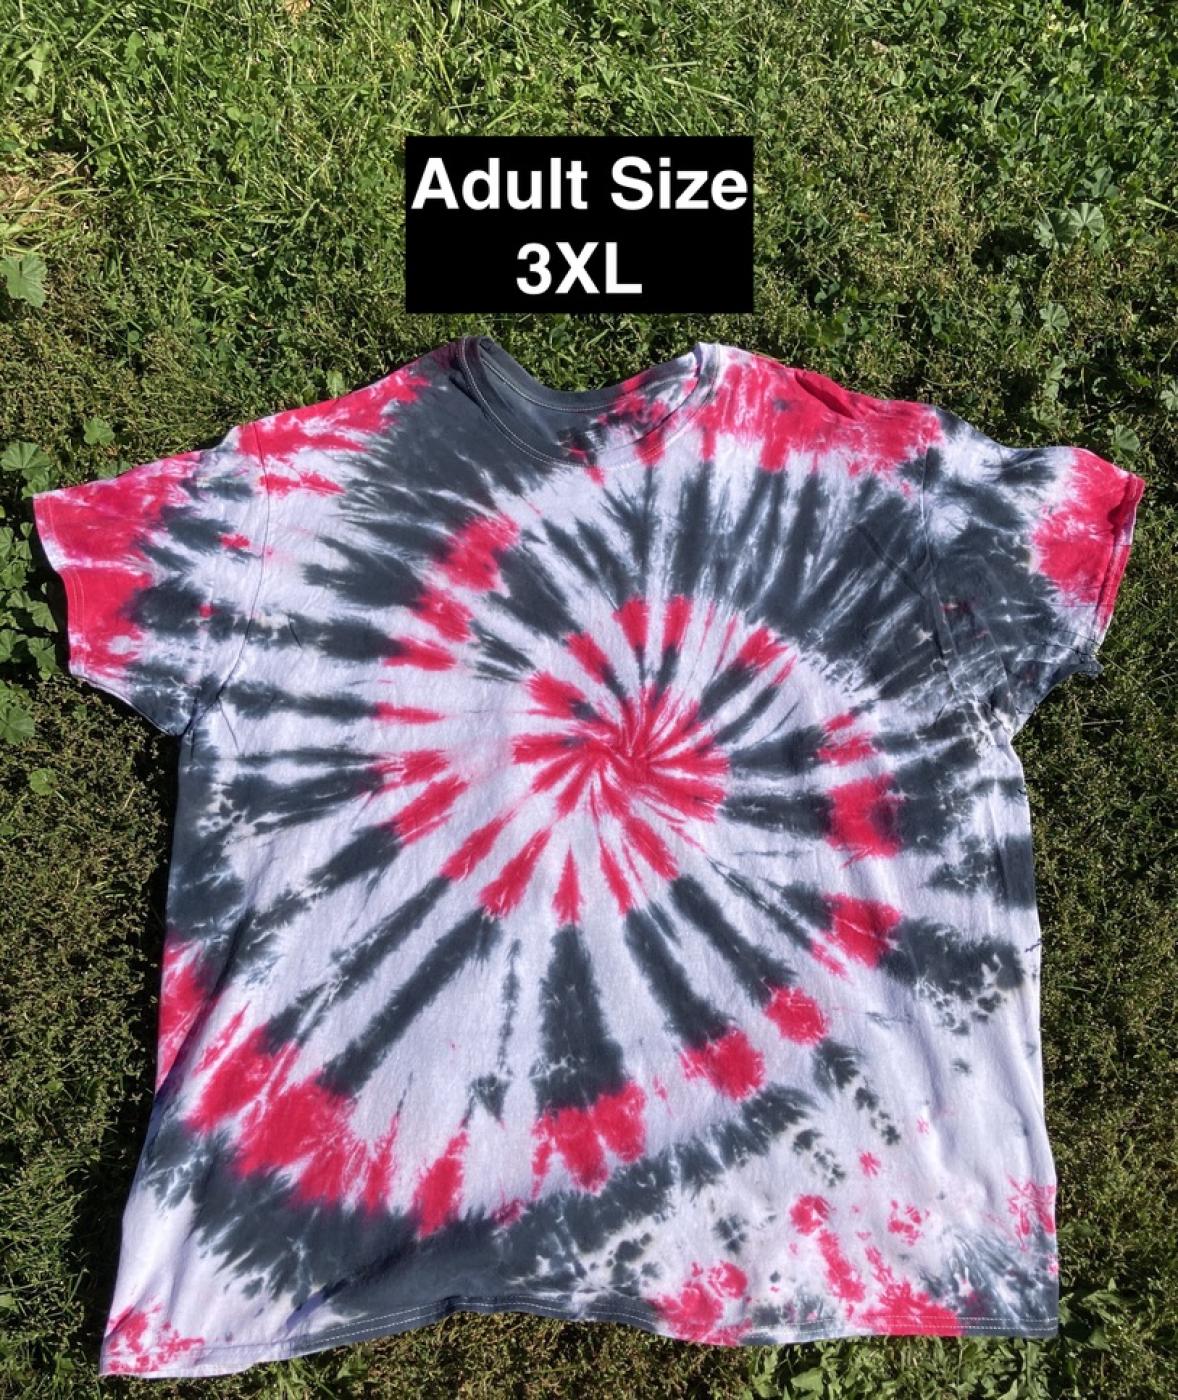 Red Black White Central Spiral Tie Dye T Shirt Adult 3XL 